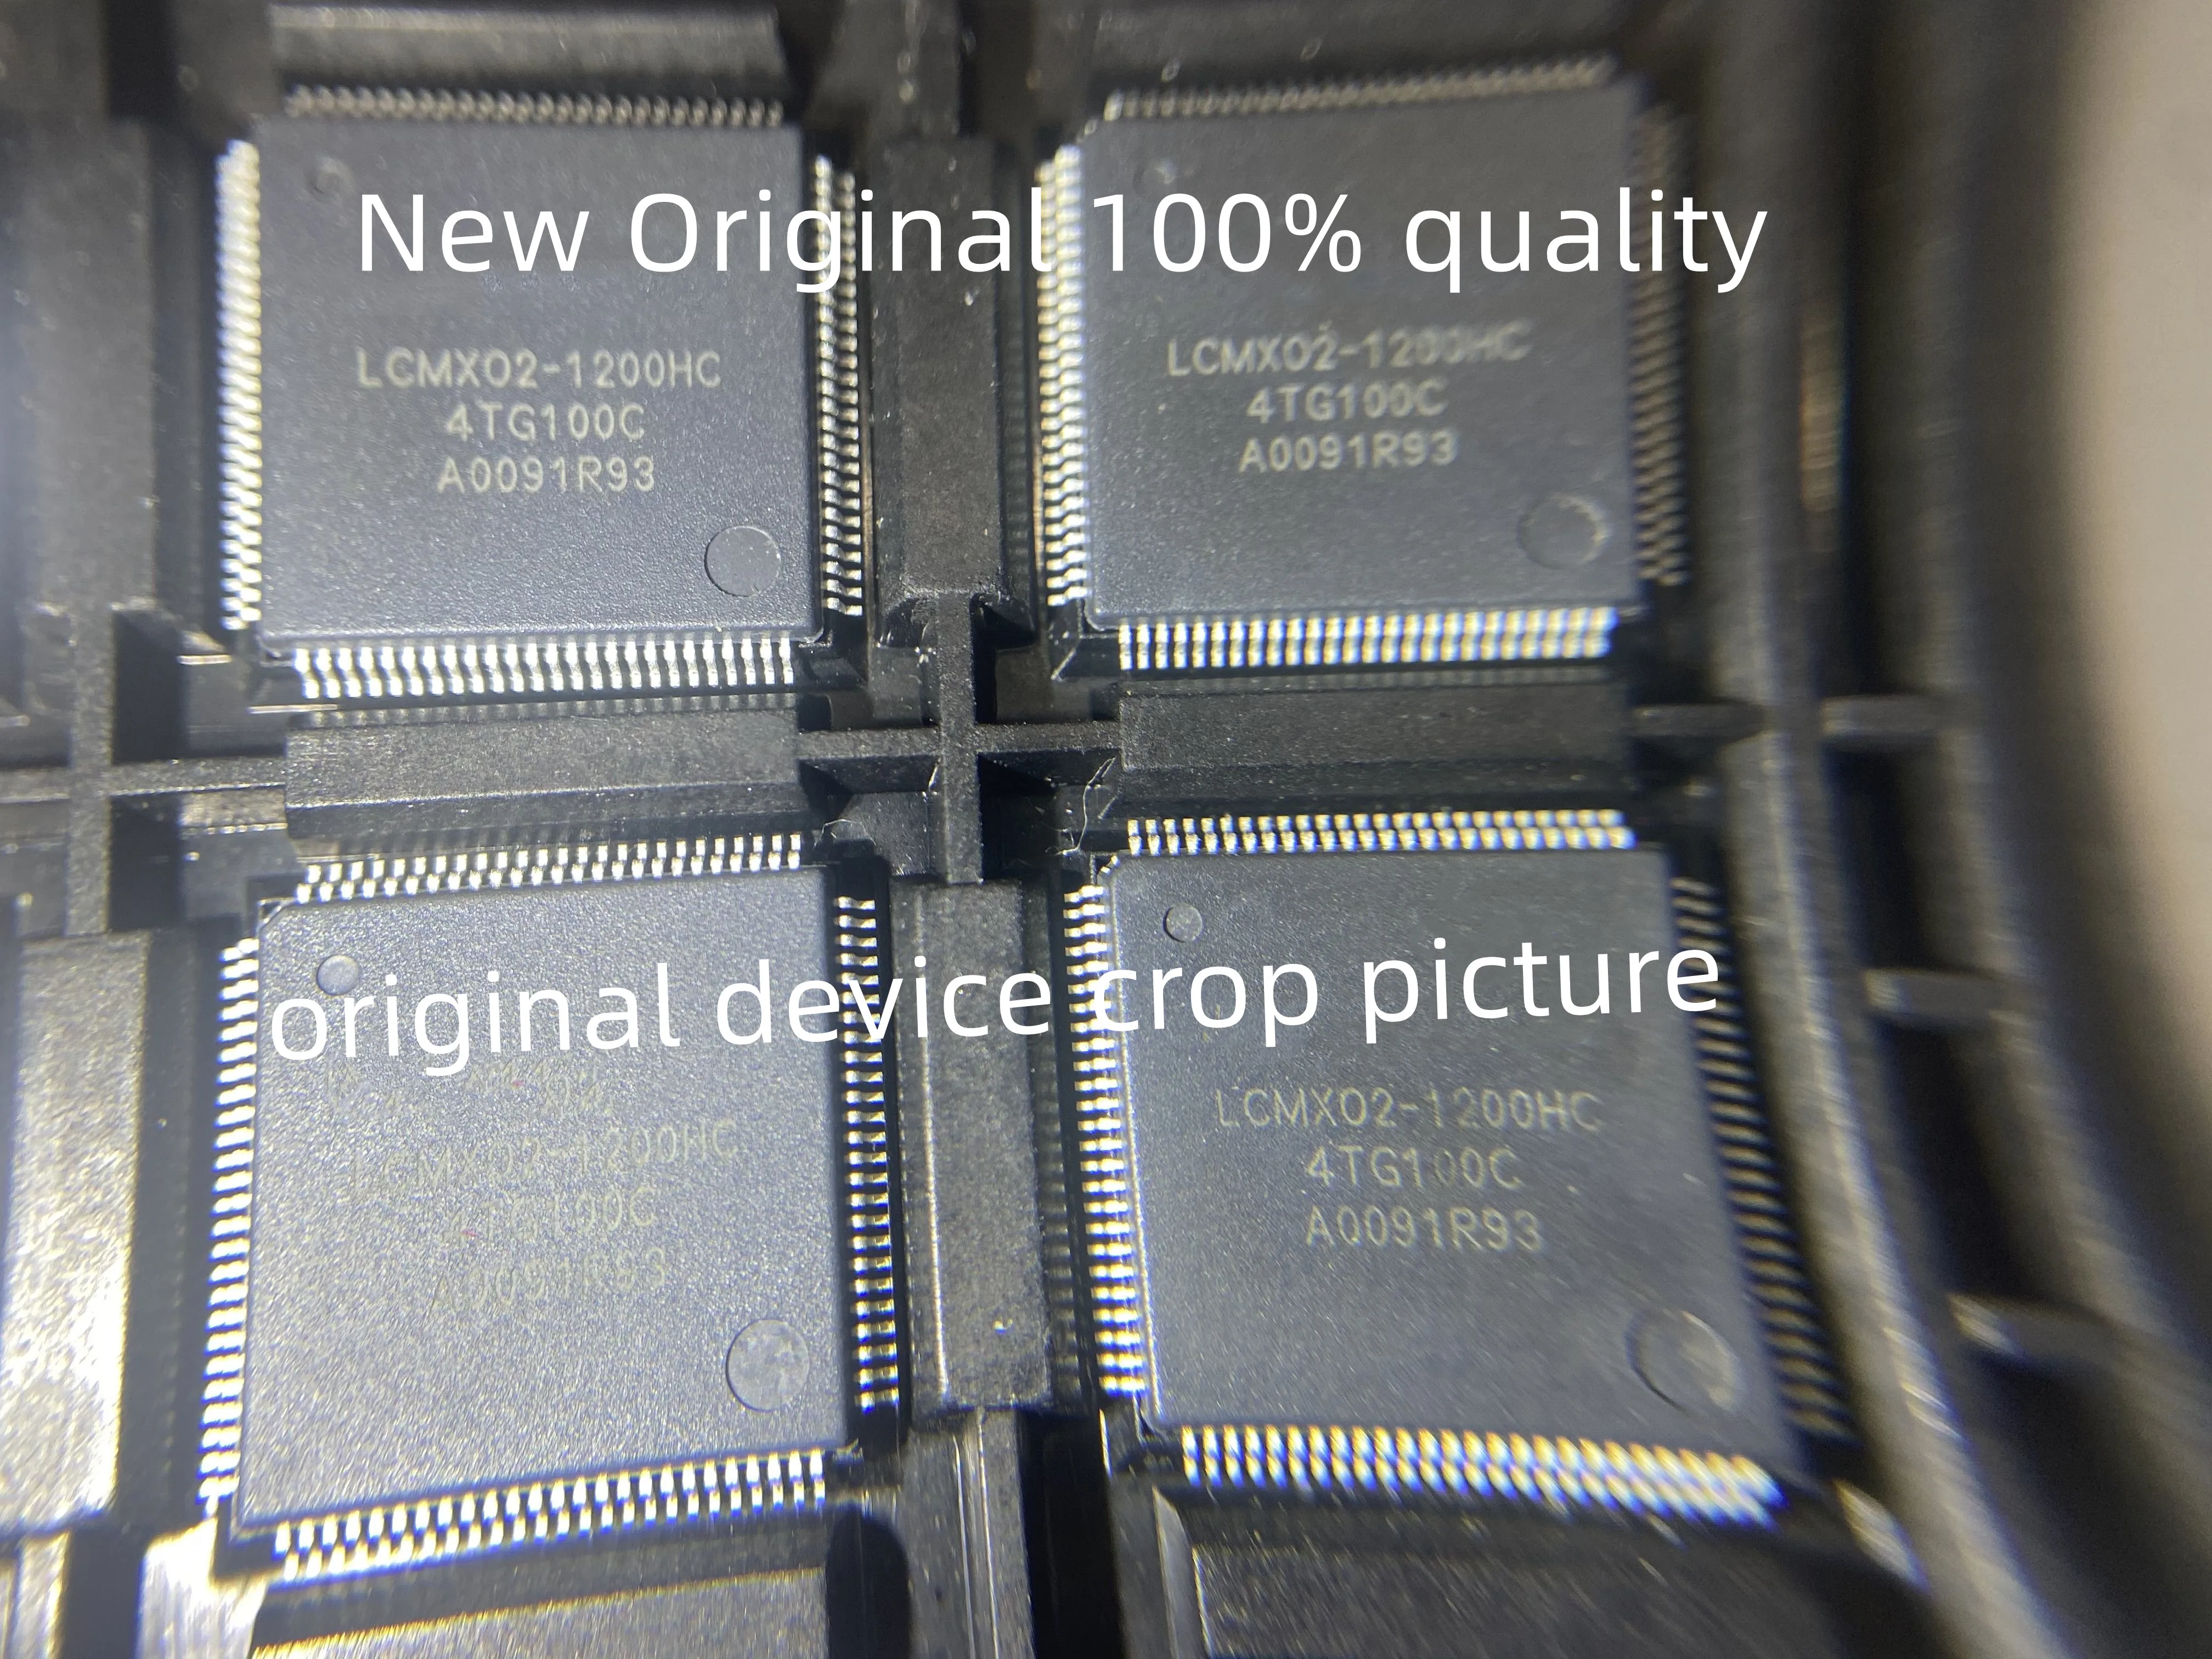 

New Original 100% Quality LCMXO2-1200HC 4TG100C LCMXO2-1200HC-4TG100C CPLD 2.5V/3.3V 100-Pin TQFP